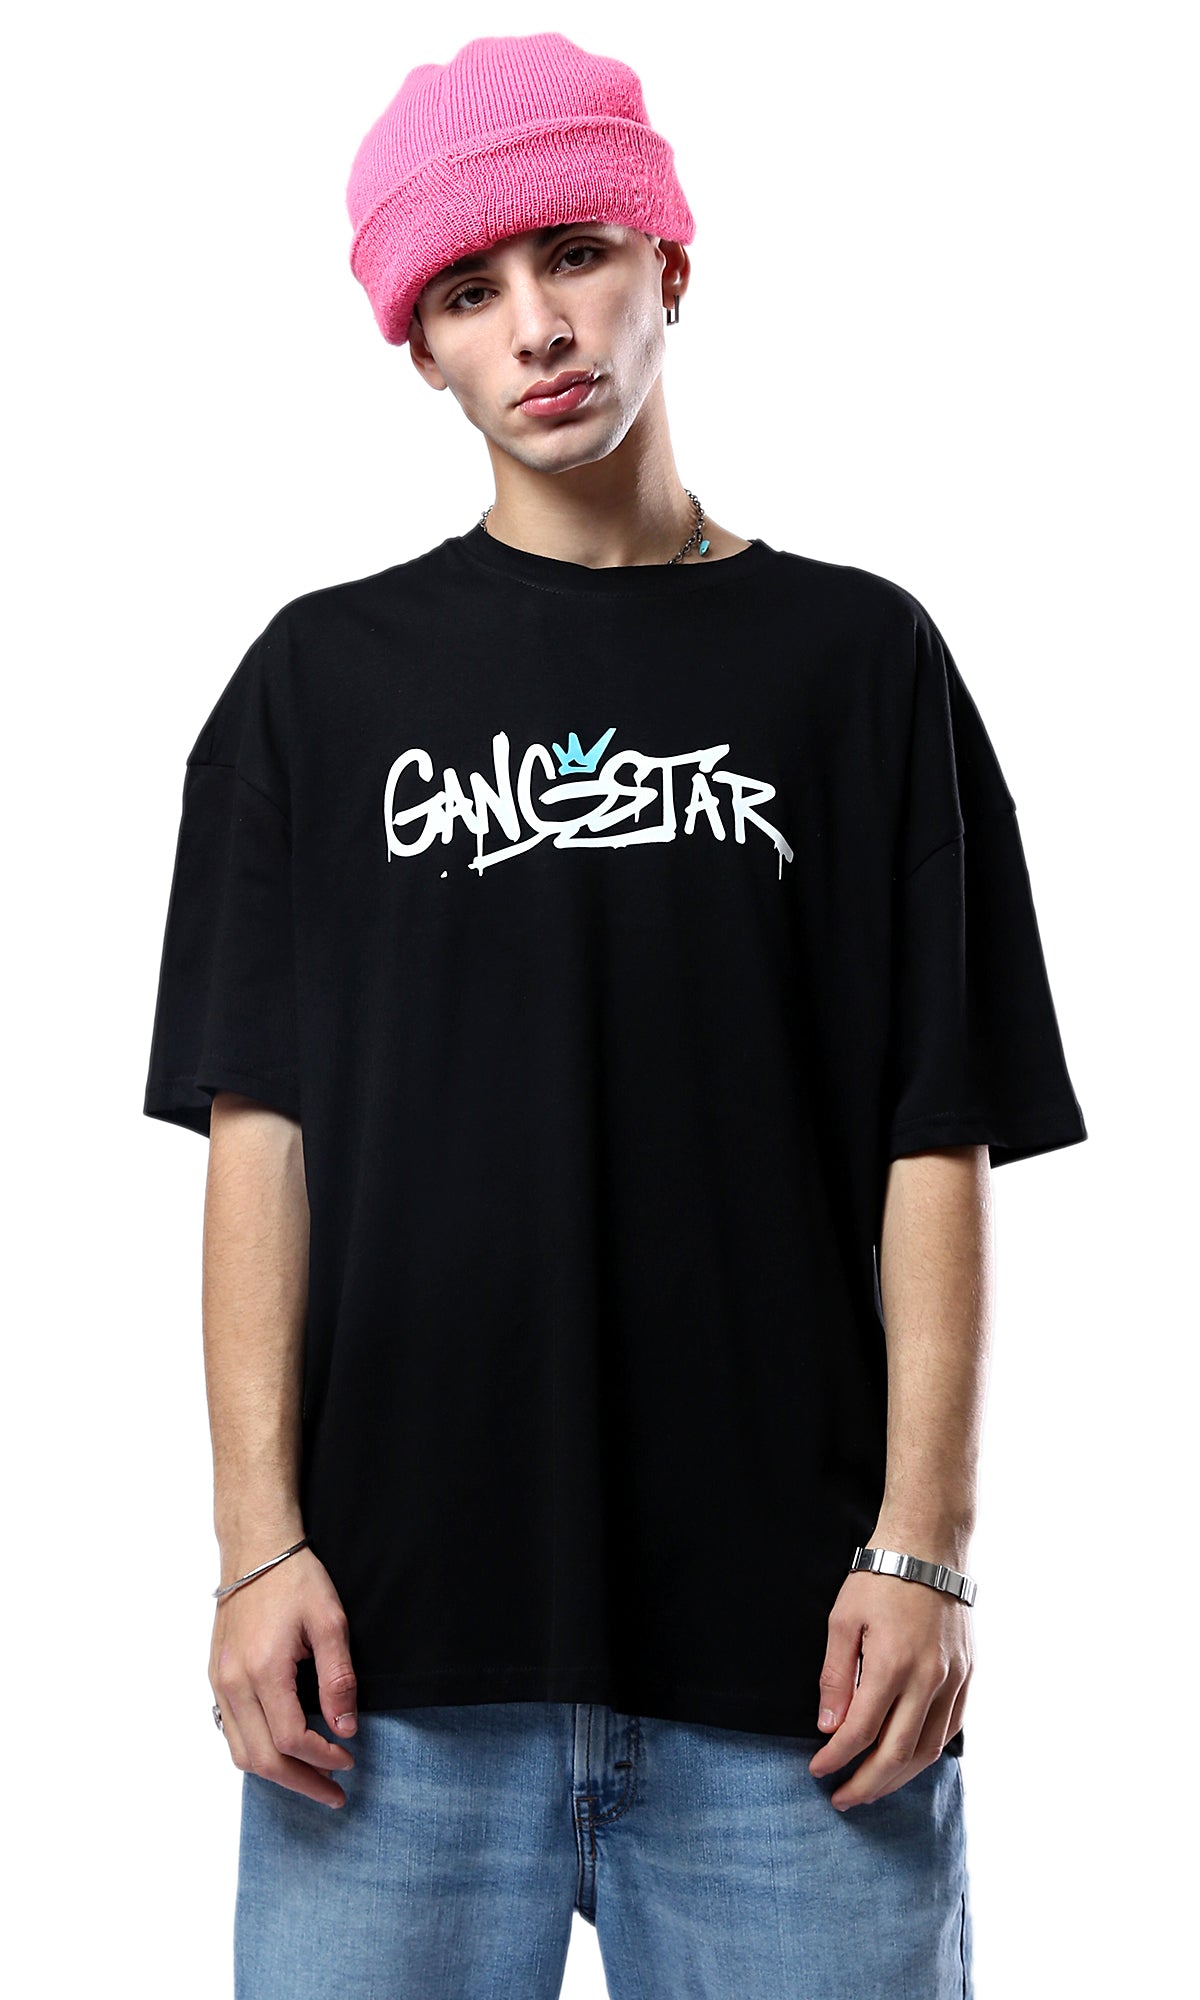 O178388 Slip On Relaxed Fit Printed "Gangstar" Black Tee